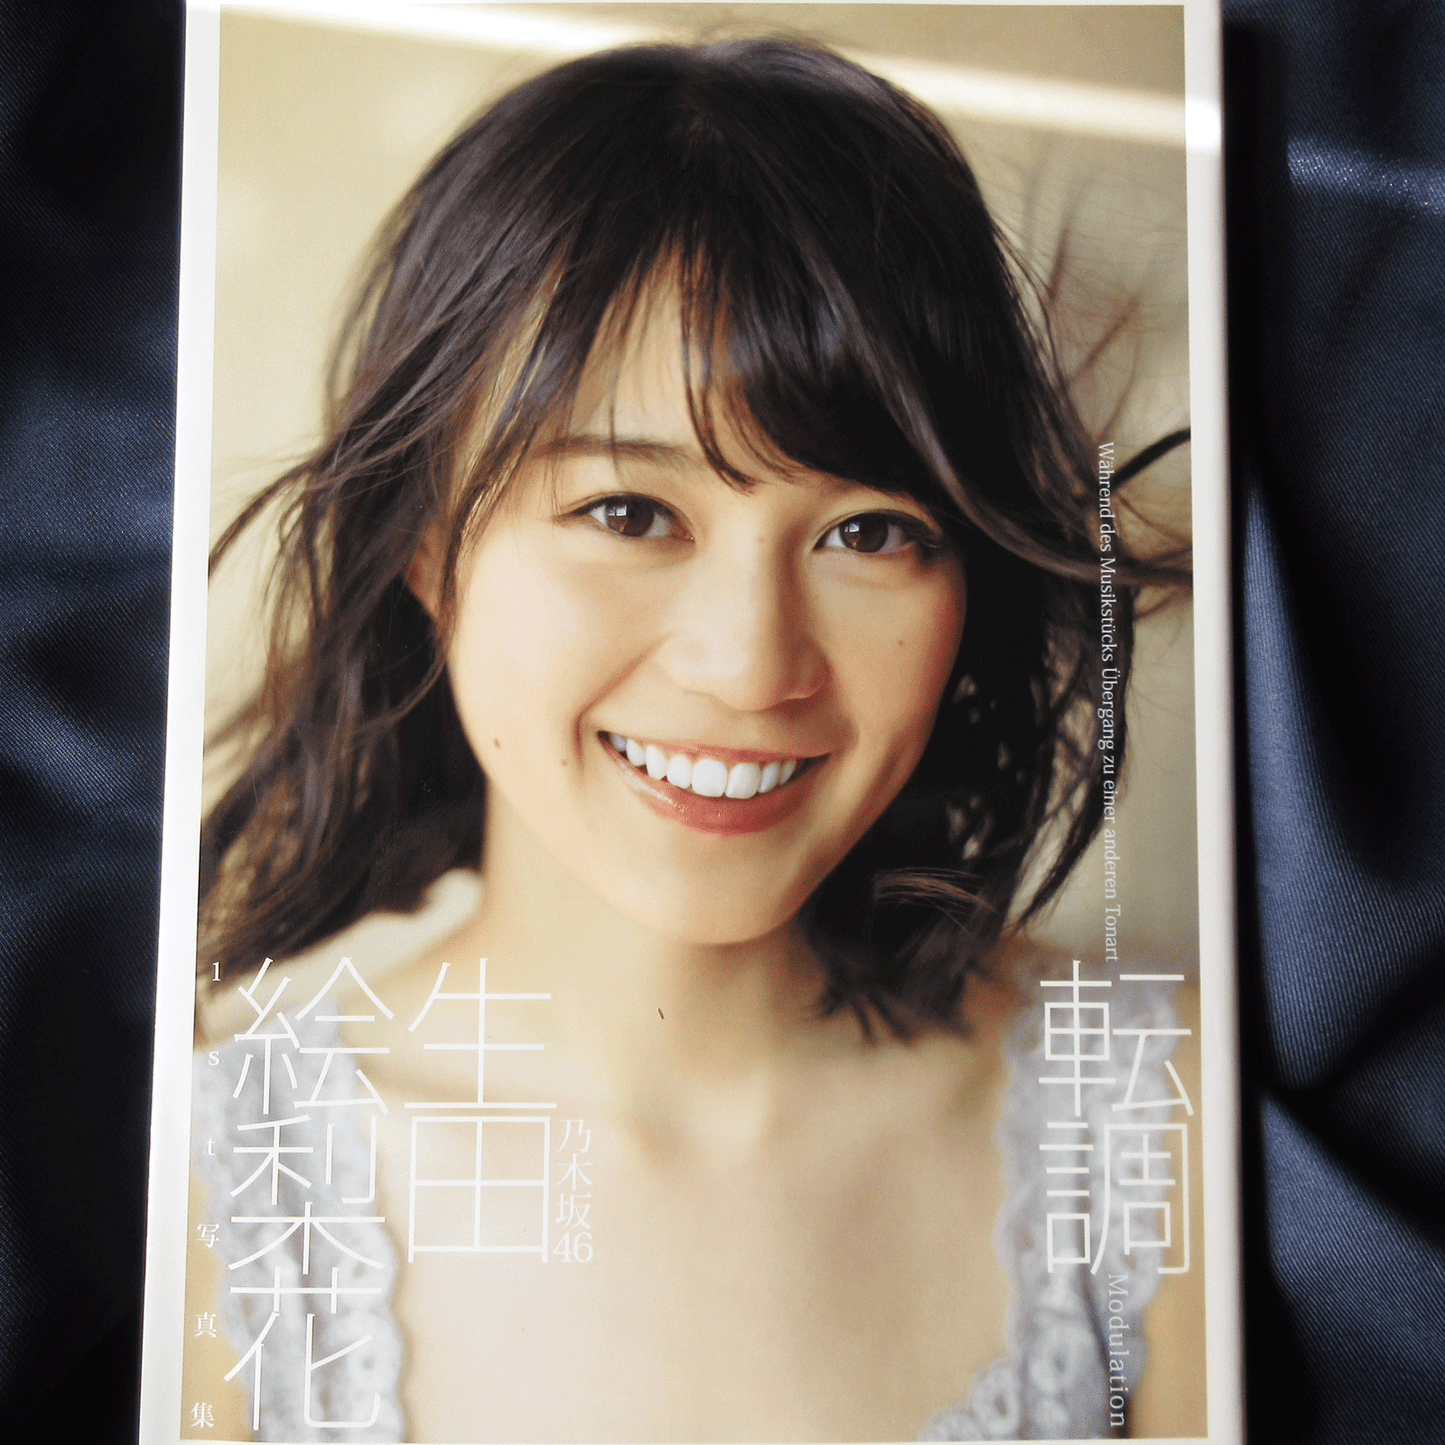 Erika Ikuta 1st Photo Book "Modulation" /Nogizaka46